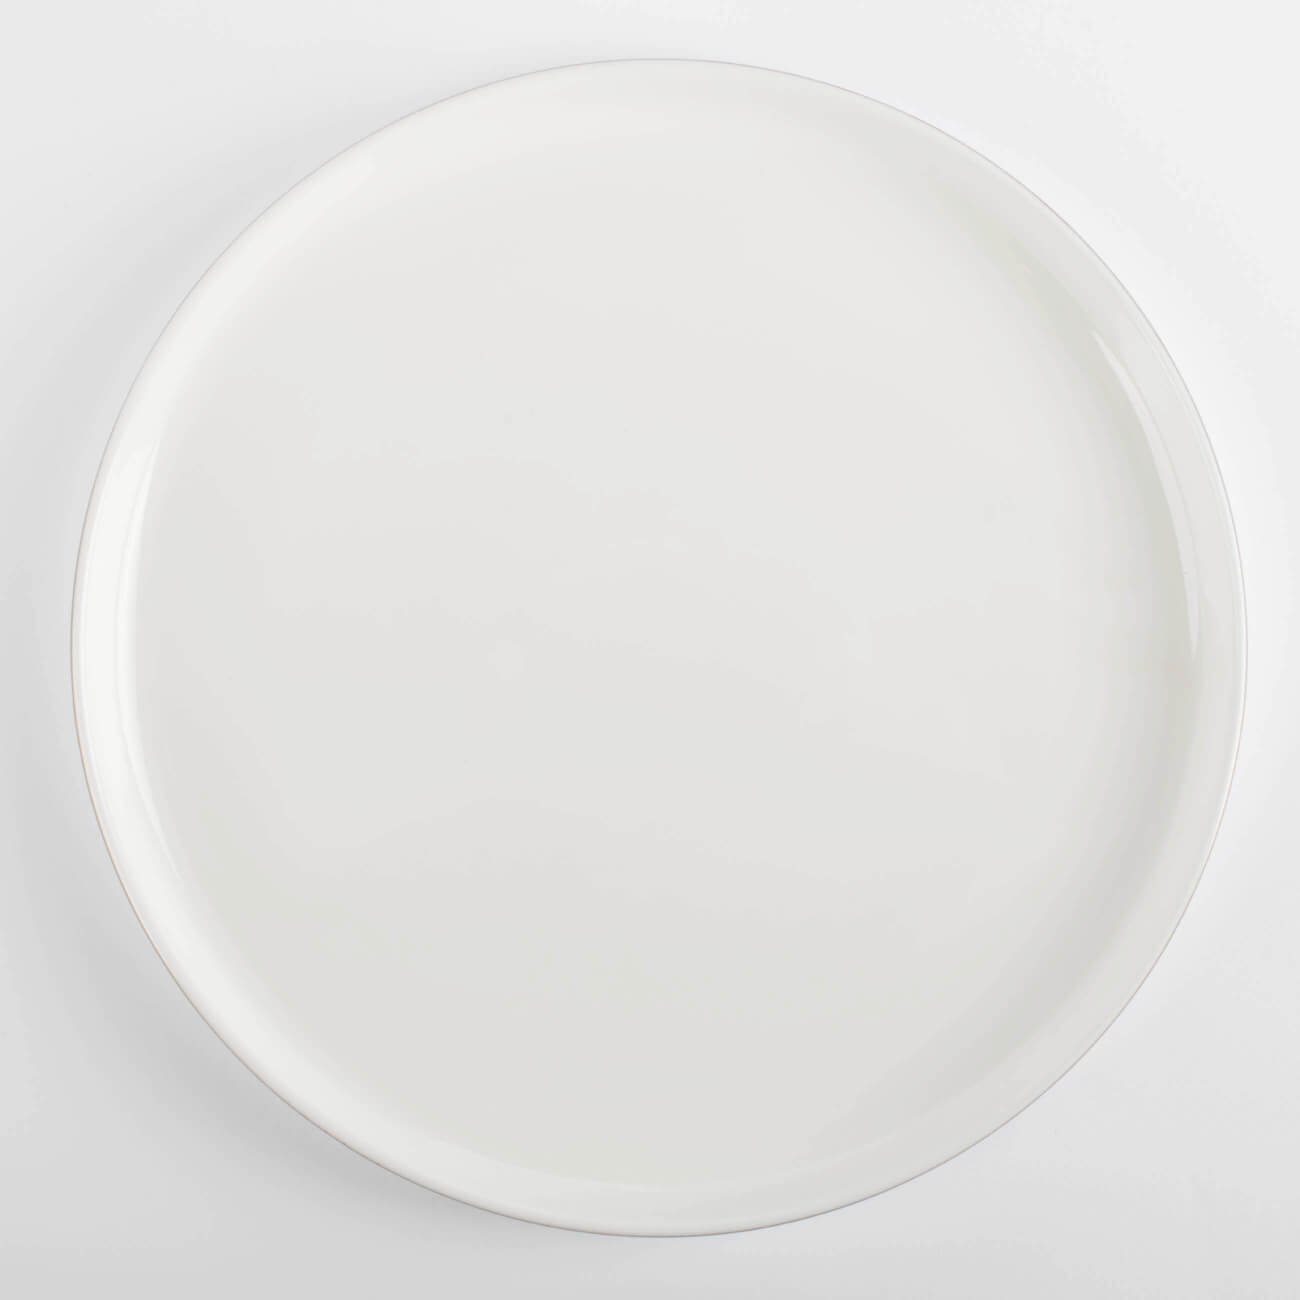 Тарелка обеденная, 26 см, фарфор F, белая, Ideal gold тарелка обеденная luminarc arty mustard 26 см